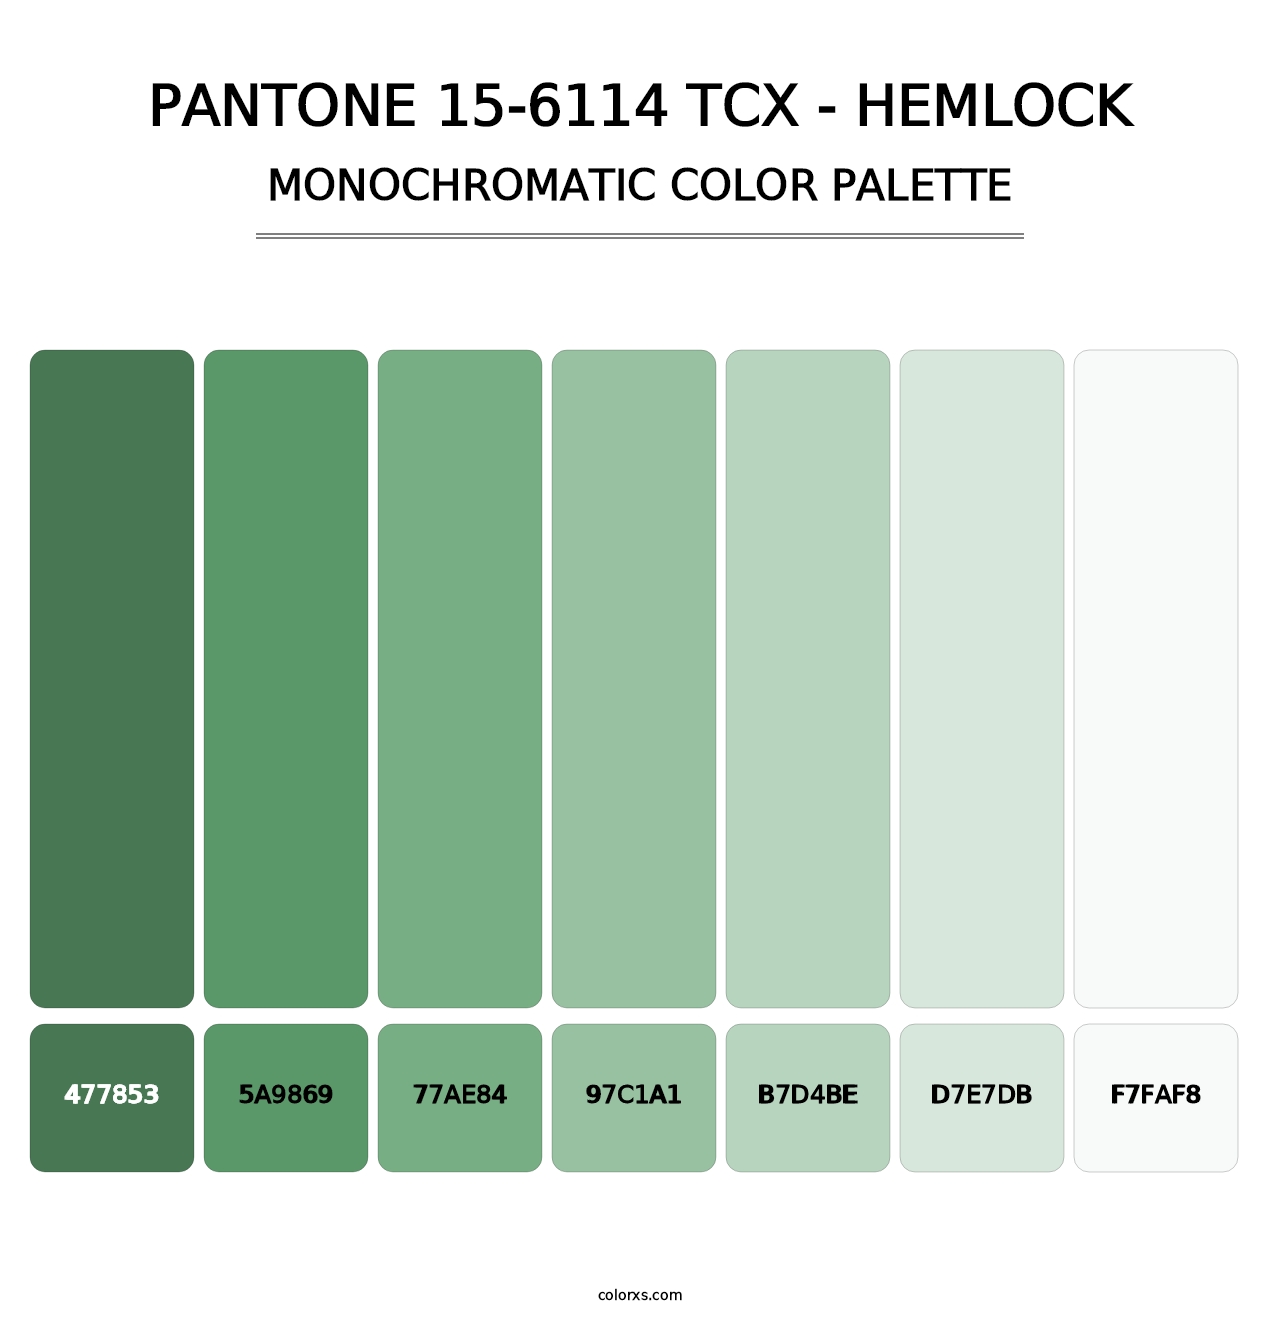 PANTONE 15-6114 TCX - Hemlock - Monochromatic Color Palette